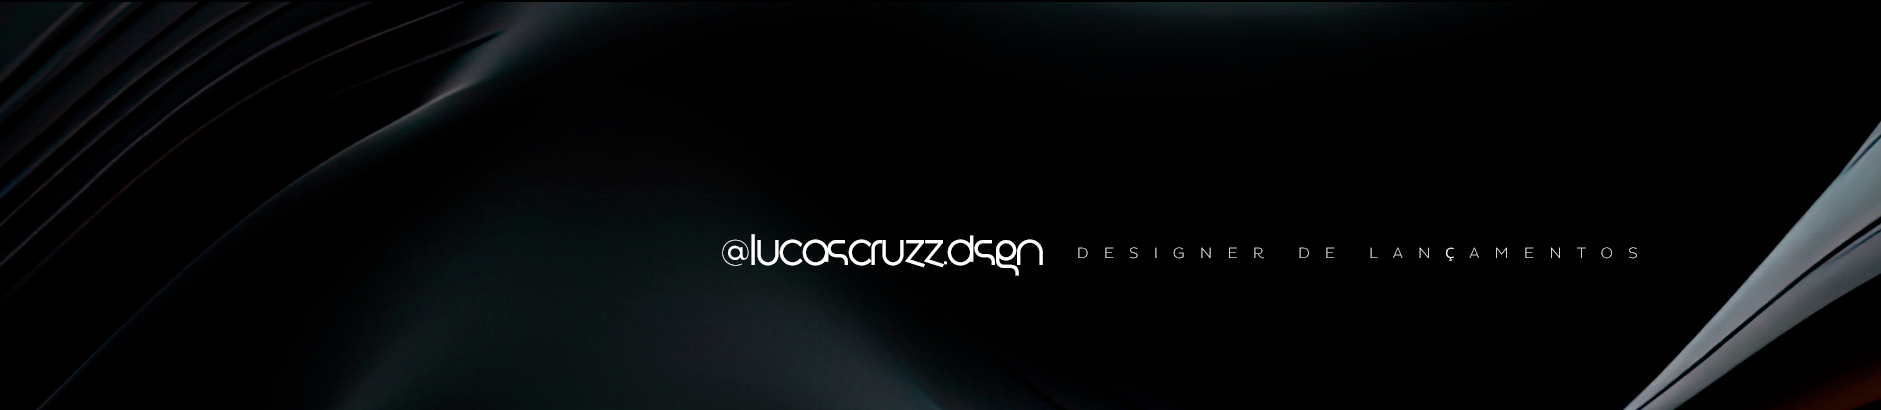 Lucas Oliveira's profile banner